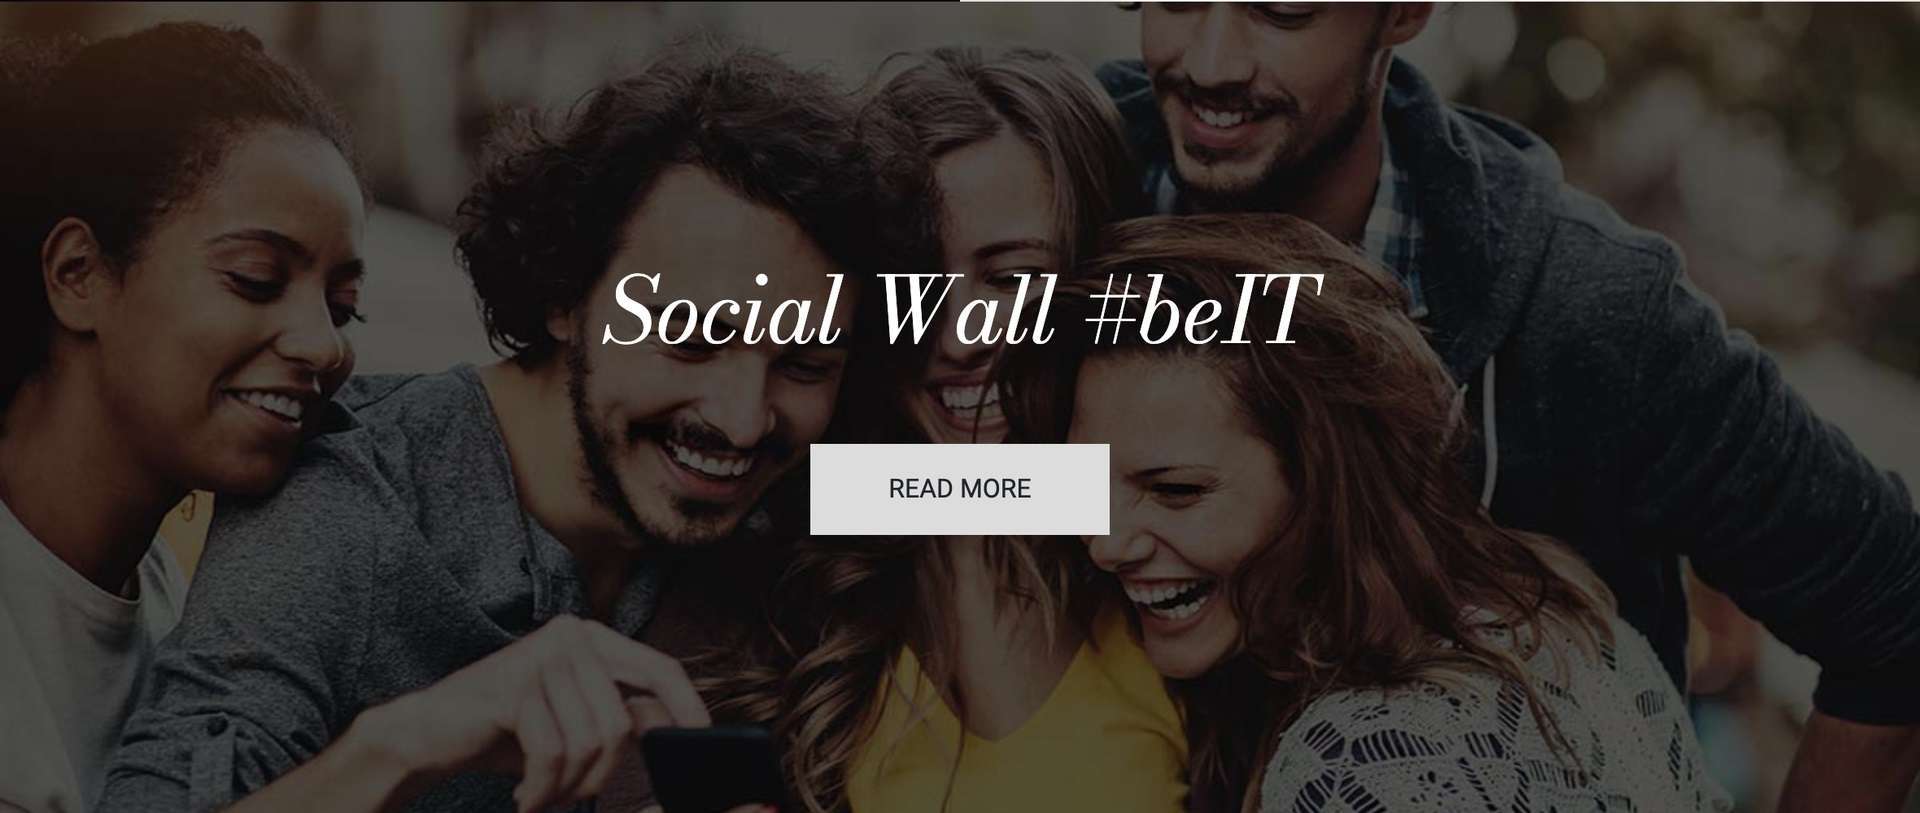 Social Wall Made in Italy